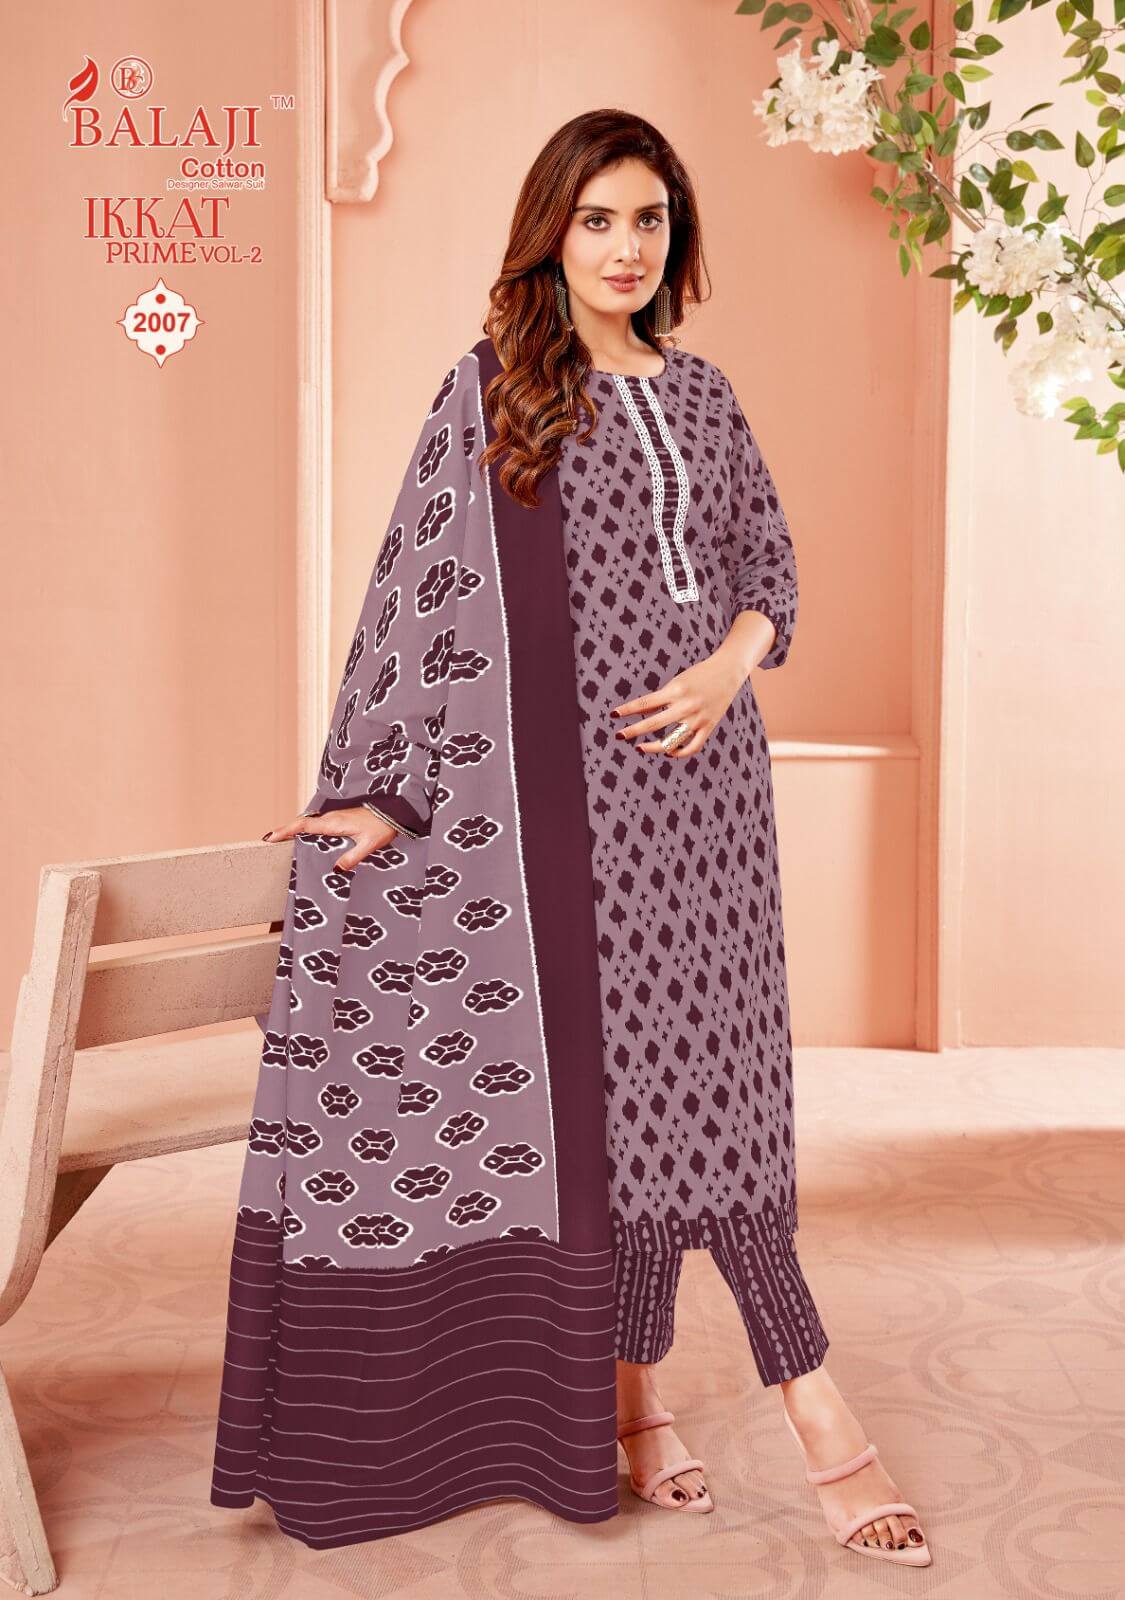 Balaji Cotton Ikkat Prime Vol 2 Readymade Dress Catalog collection 13